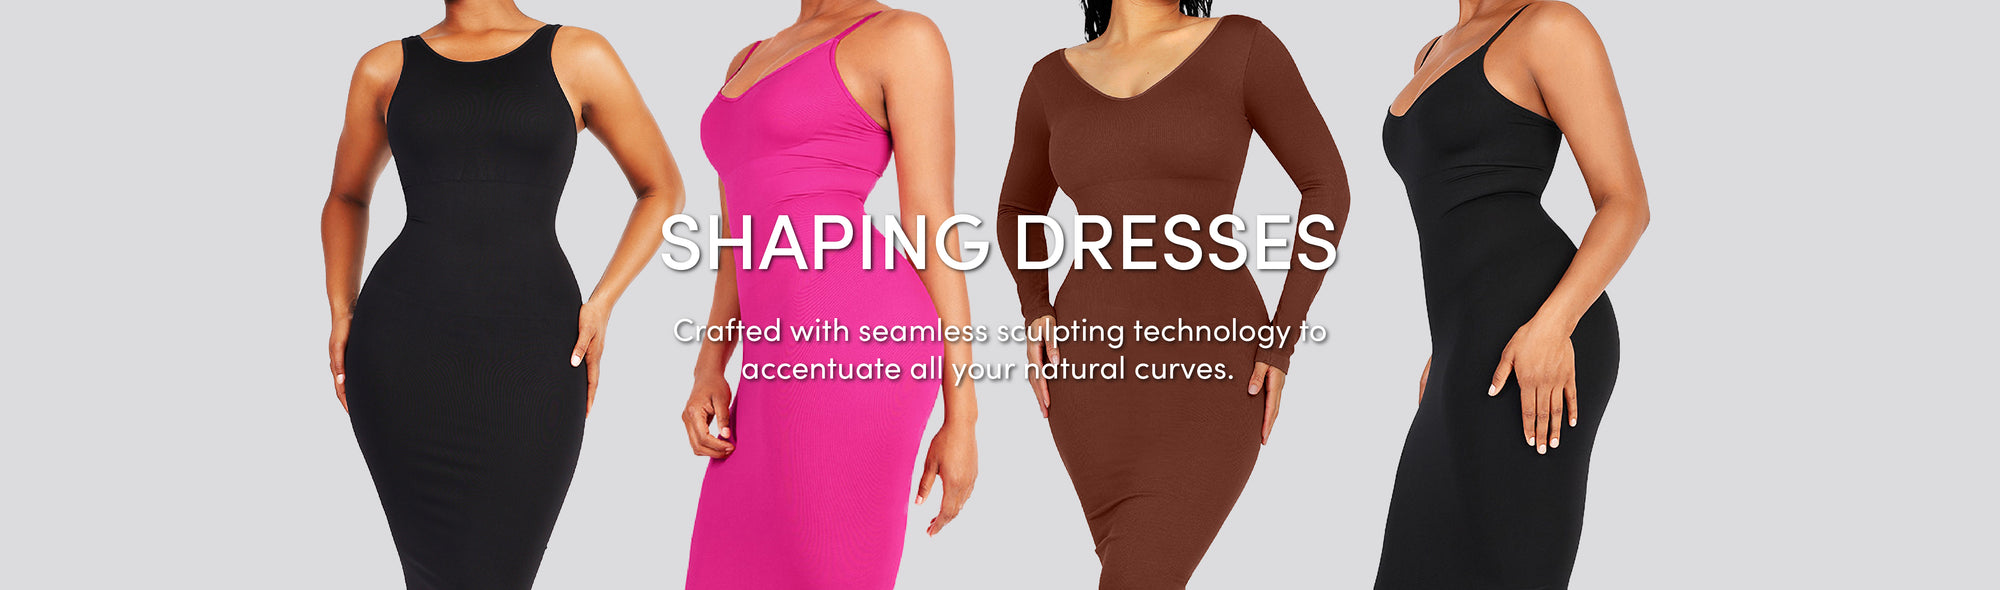 Shaping Dresses